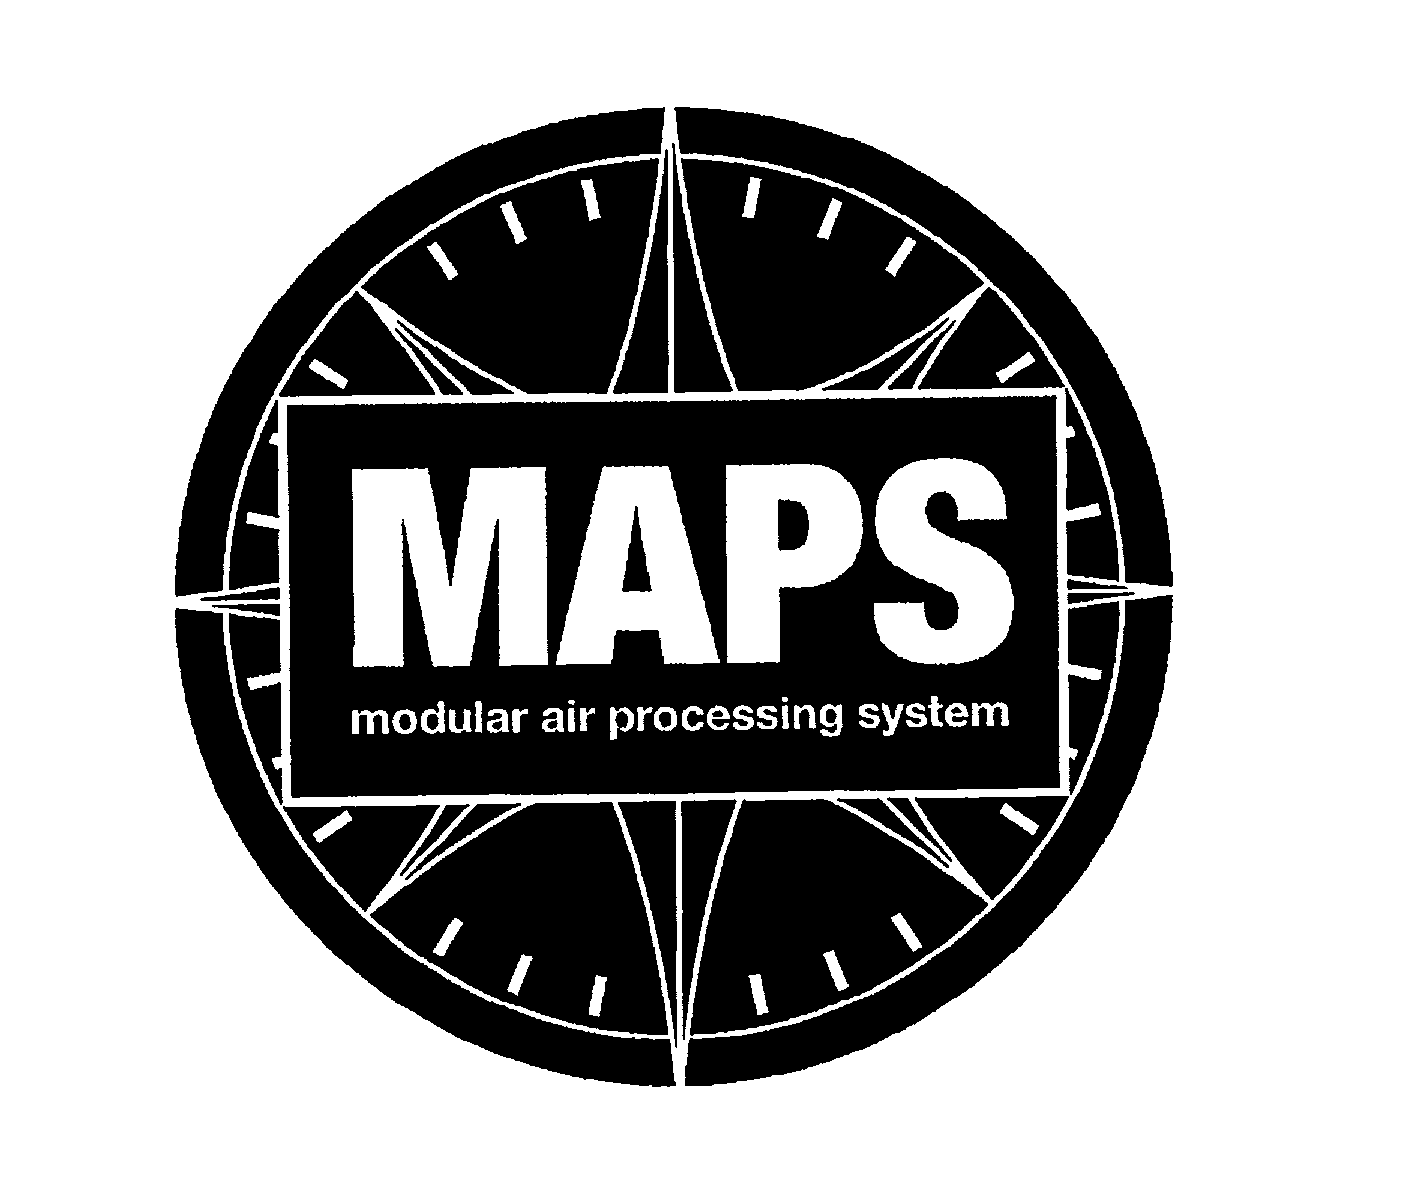  MAPS MODULAR AIR PROCESSING SYSTEM